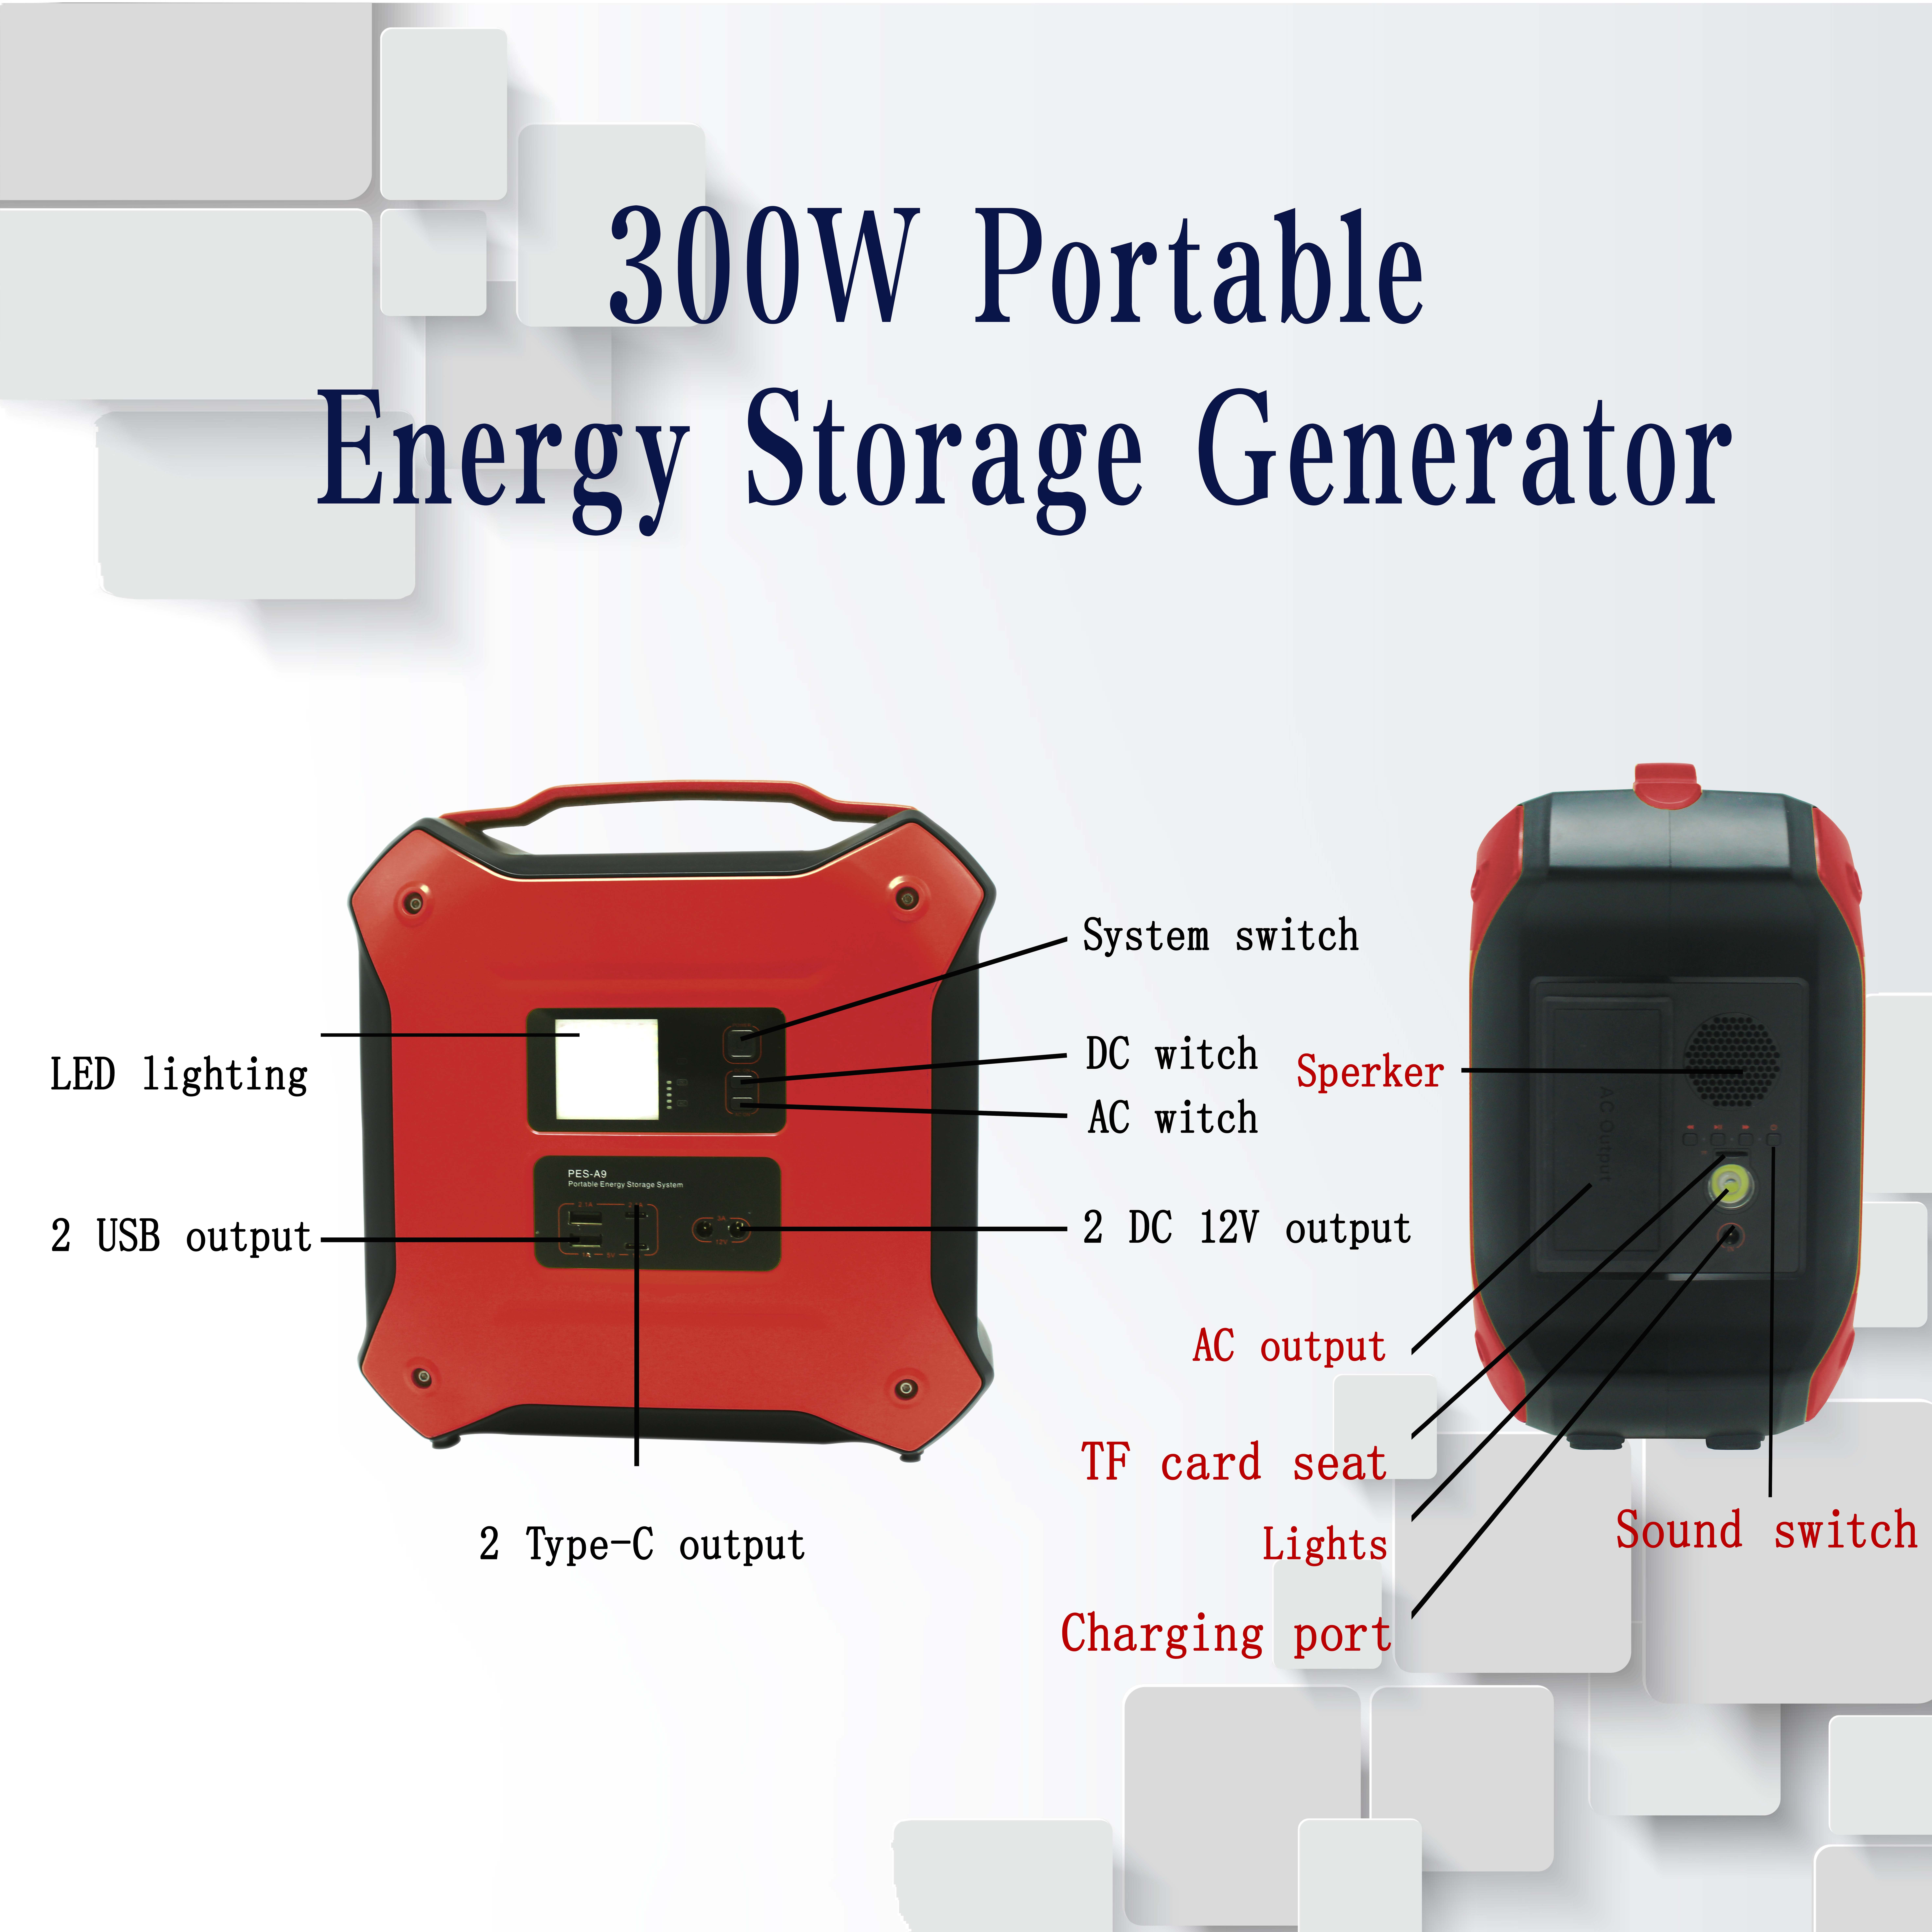 300W Portable Energy Storage Generator